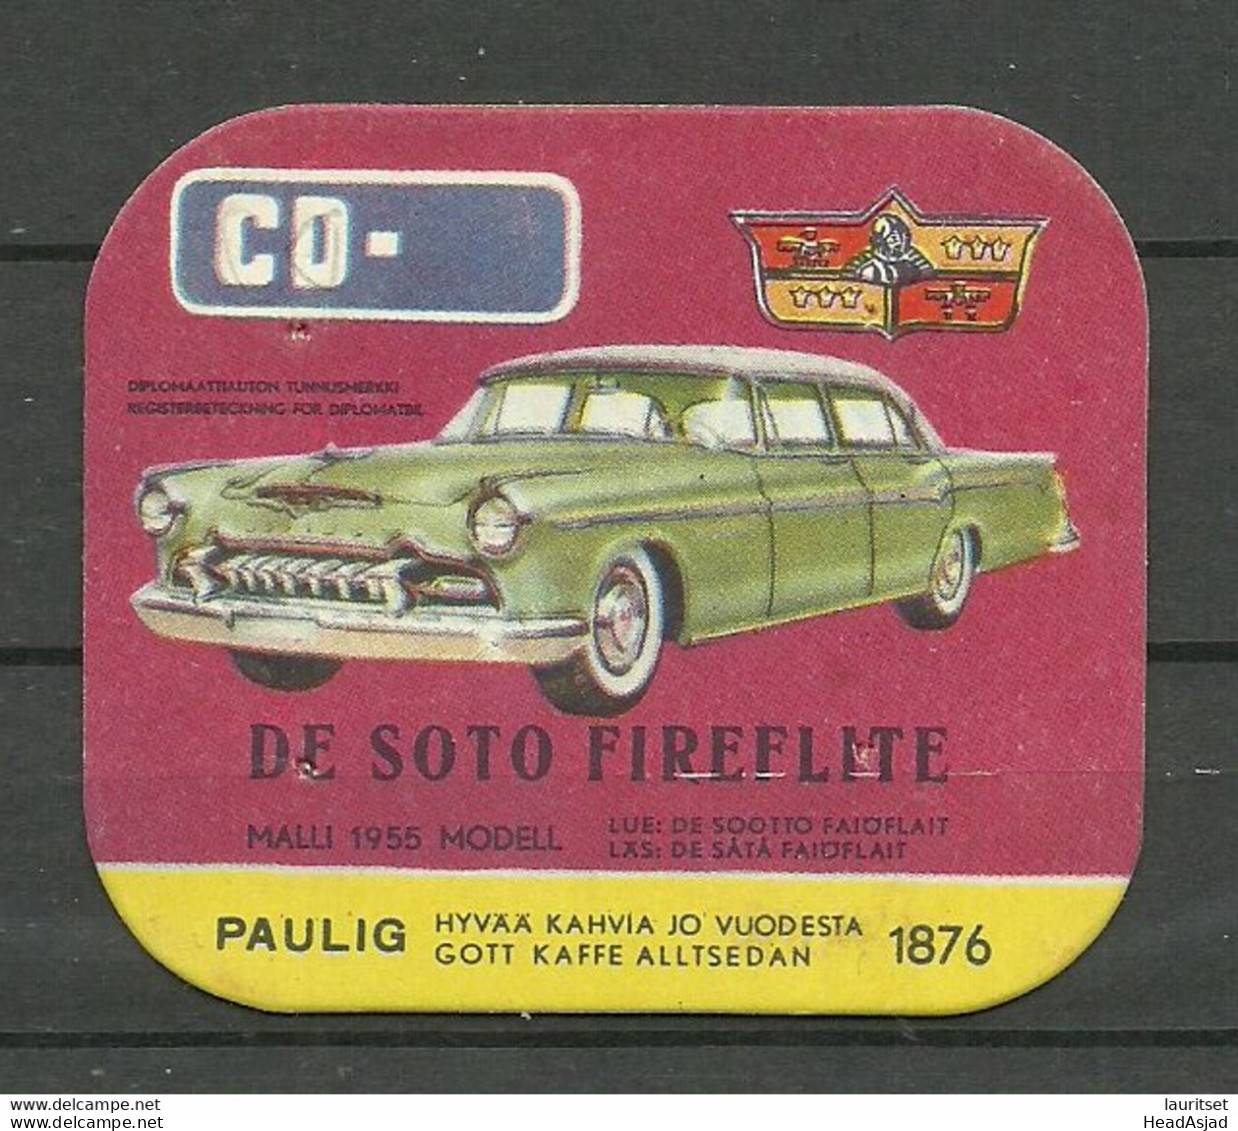 FINLAND Paulig Coffee Collection Card De Soto Fireflite 1955 Auto Car Advertising Reklame Sammelkarte - Cars